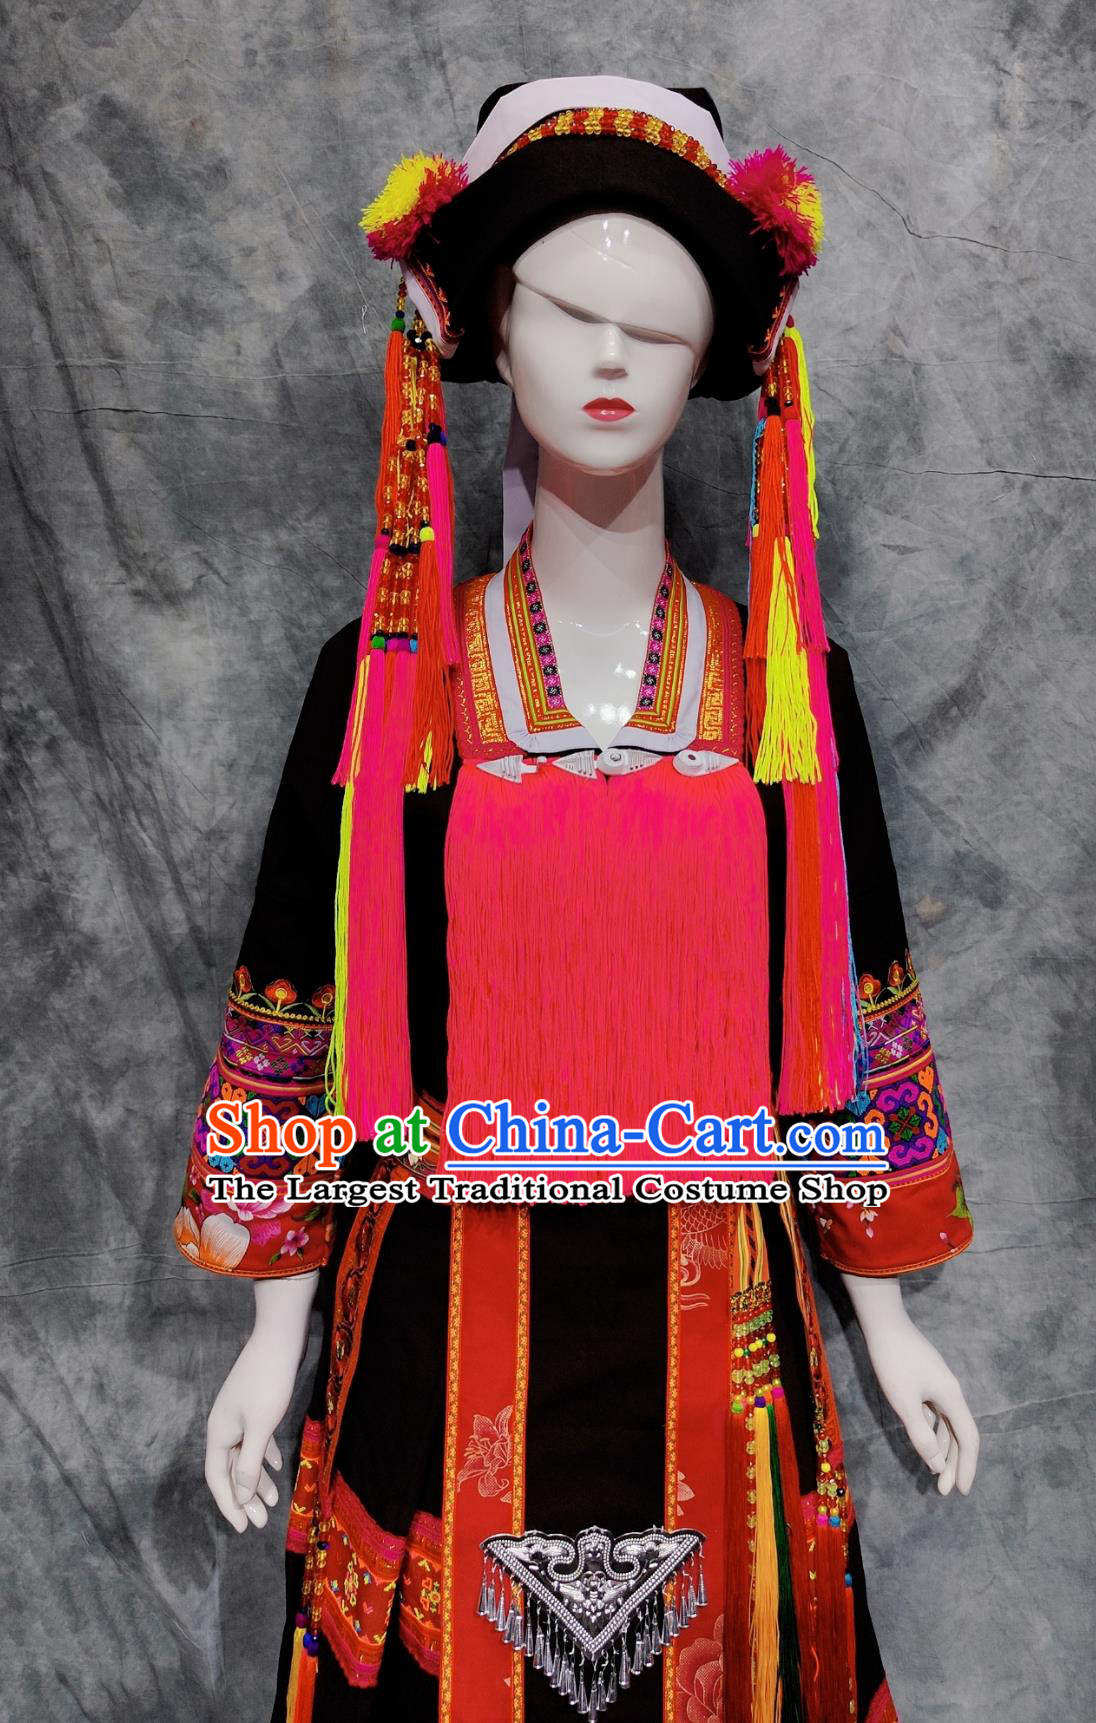 Chinese Ethnic Dance Costume China Yao National Minority Woman Clothing Traditional Guangxi March rd Festival Dress